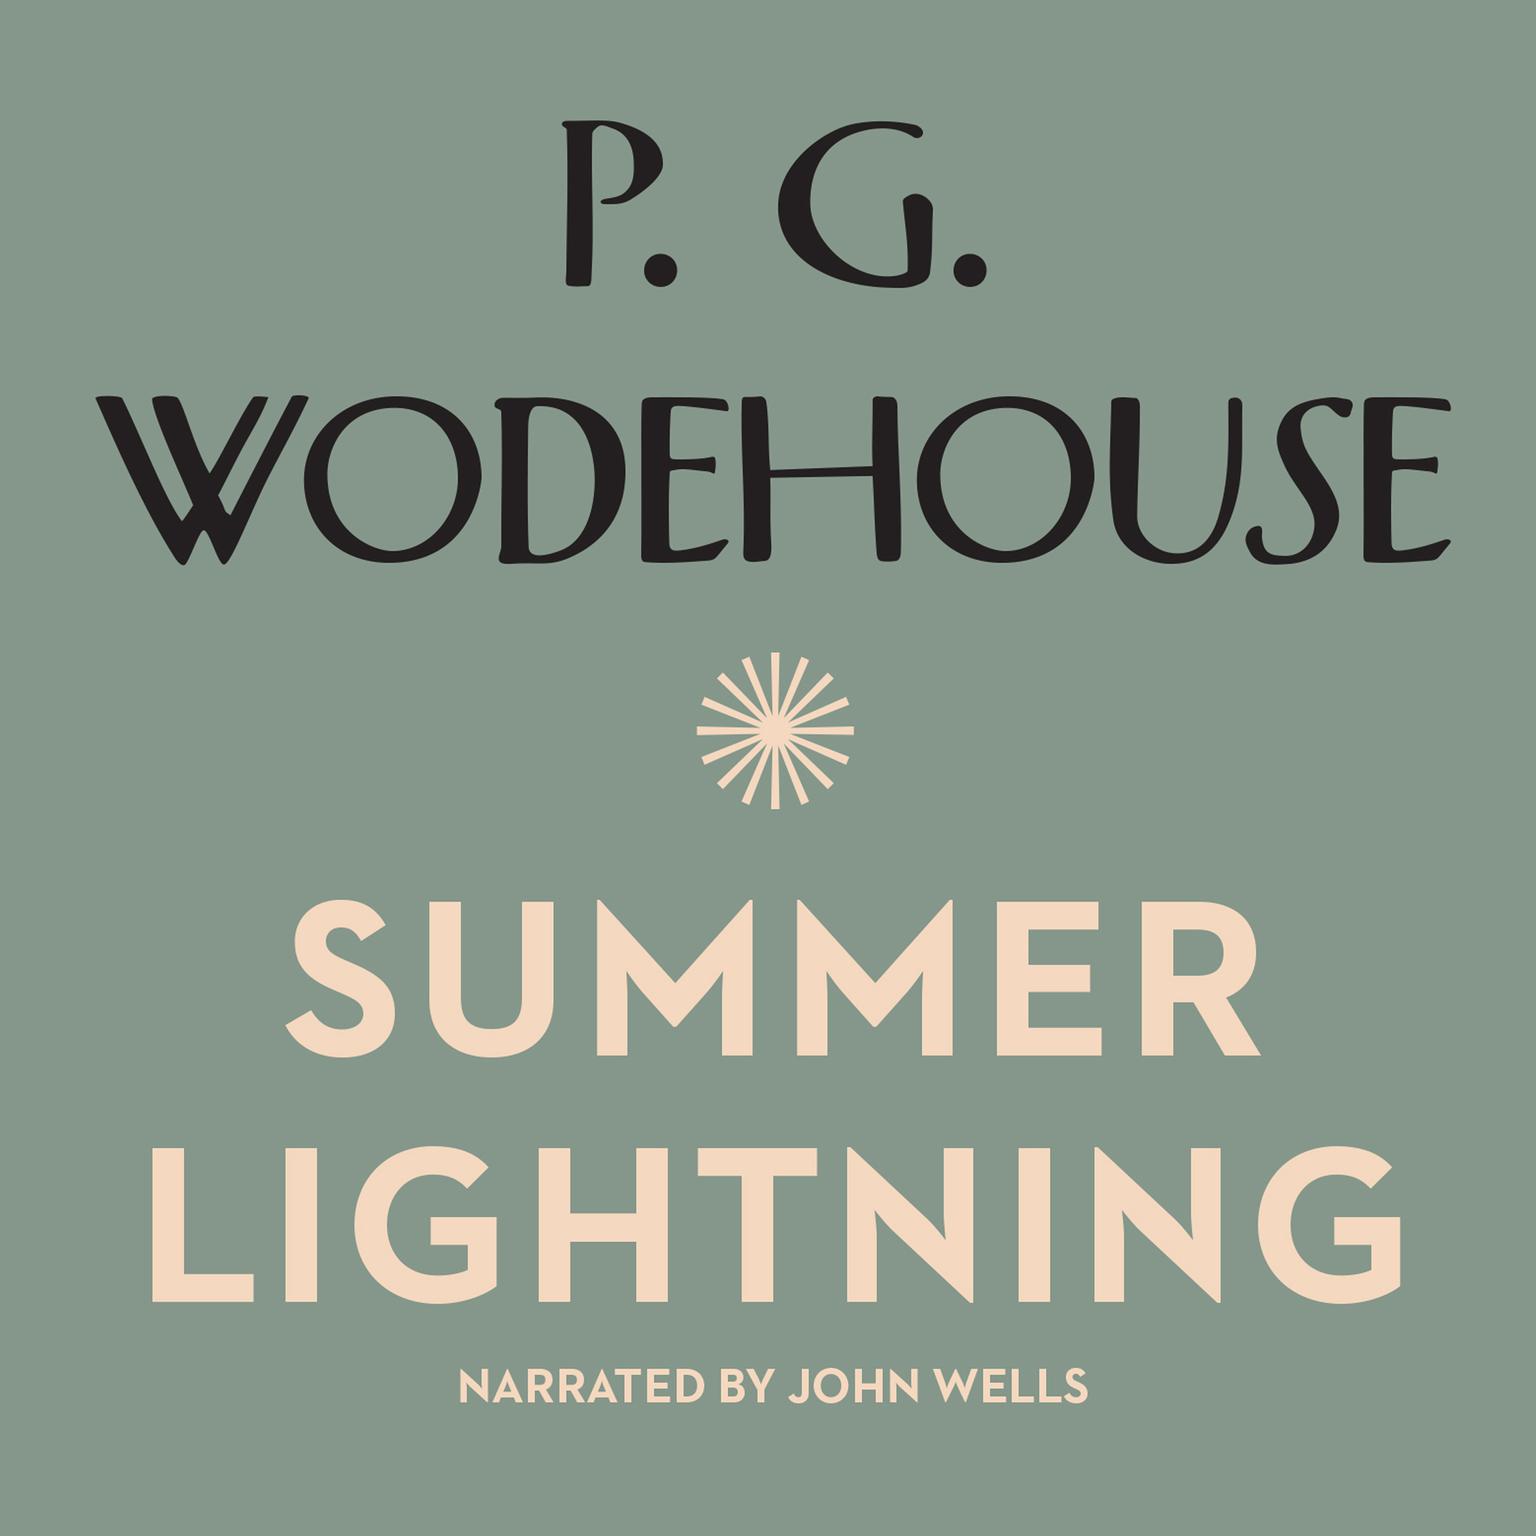 Summer Lightning Audiobook, by P. G. Wodehouse